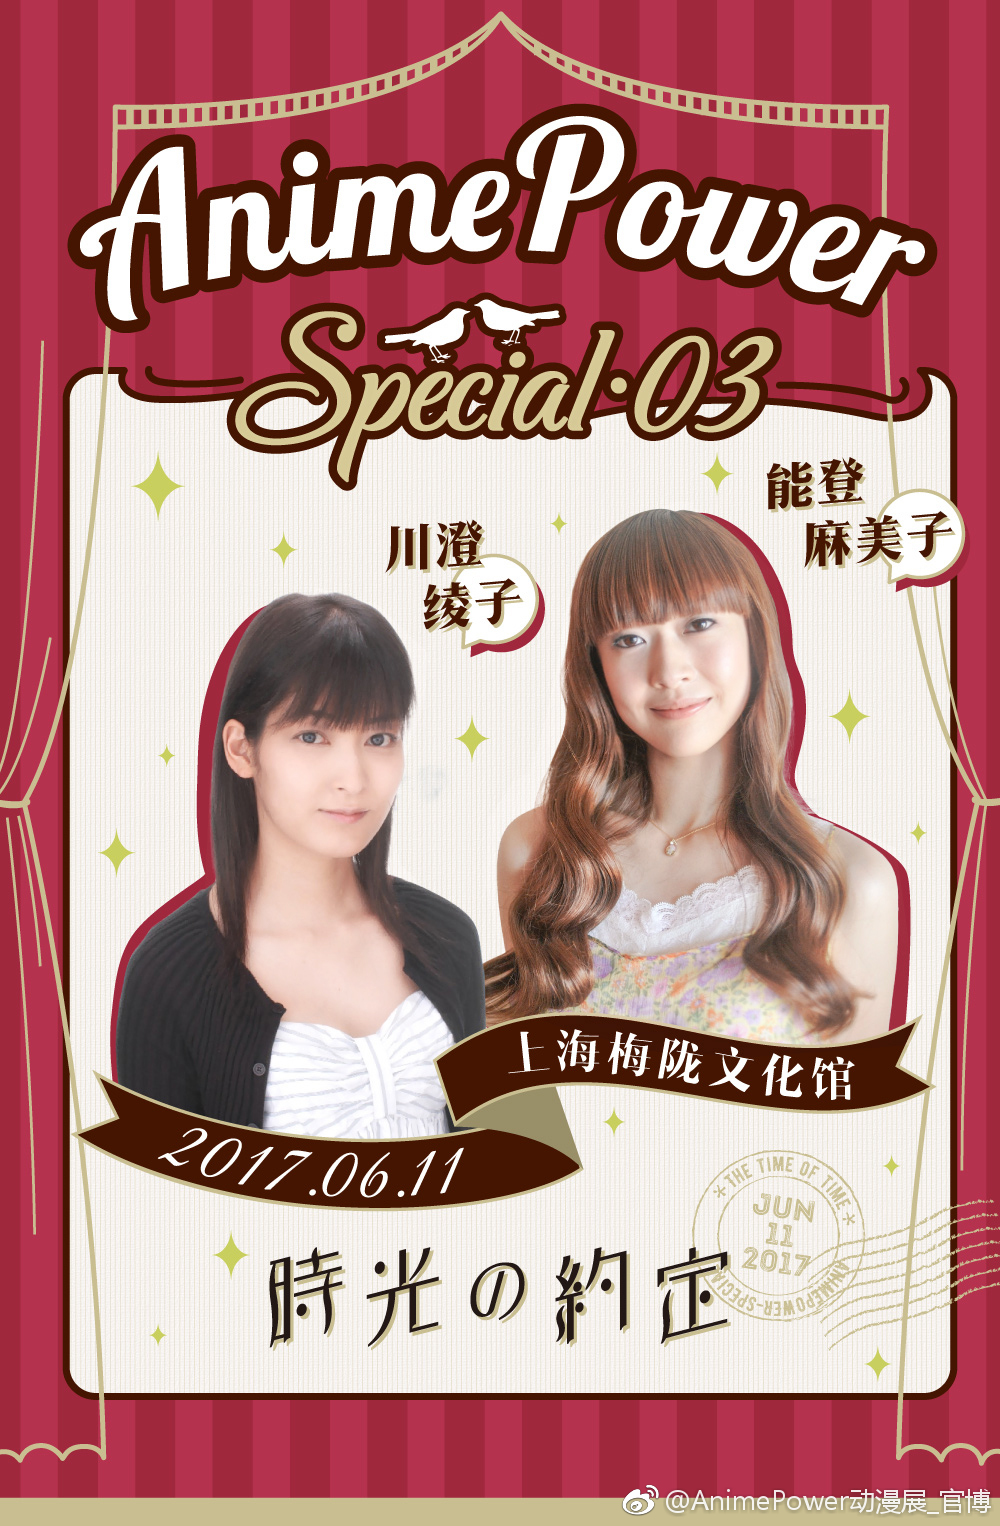 Anime Power Special03 川澄绫子 能登麻美子『时间的约会』上海见面会